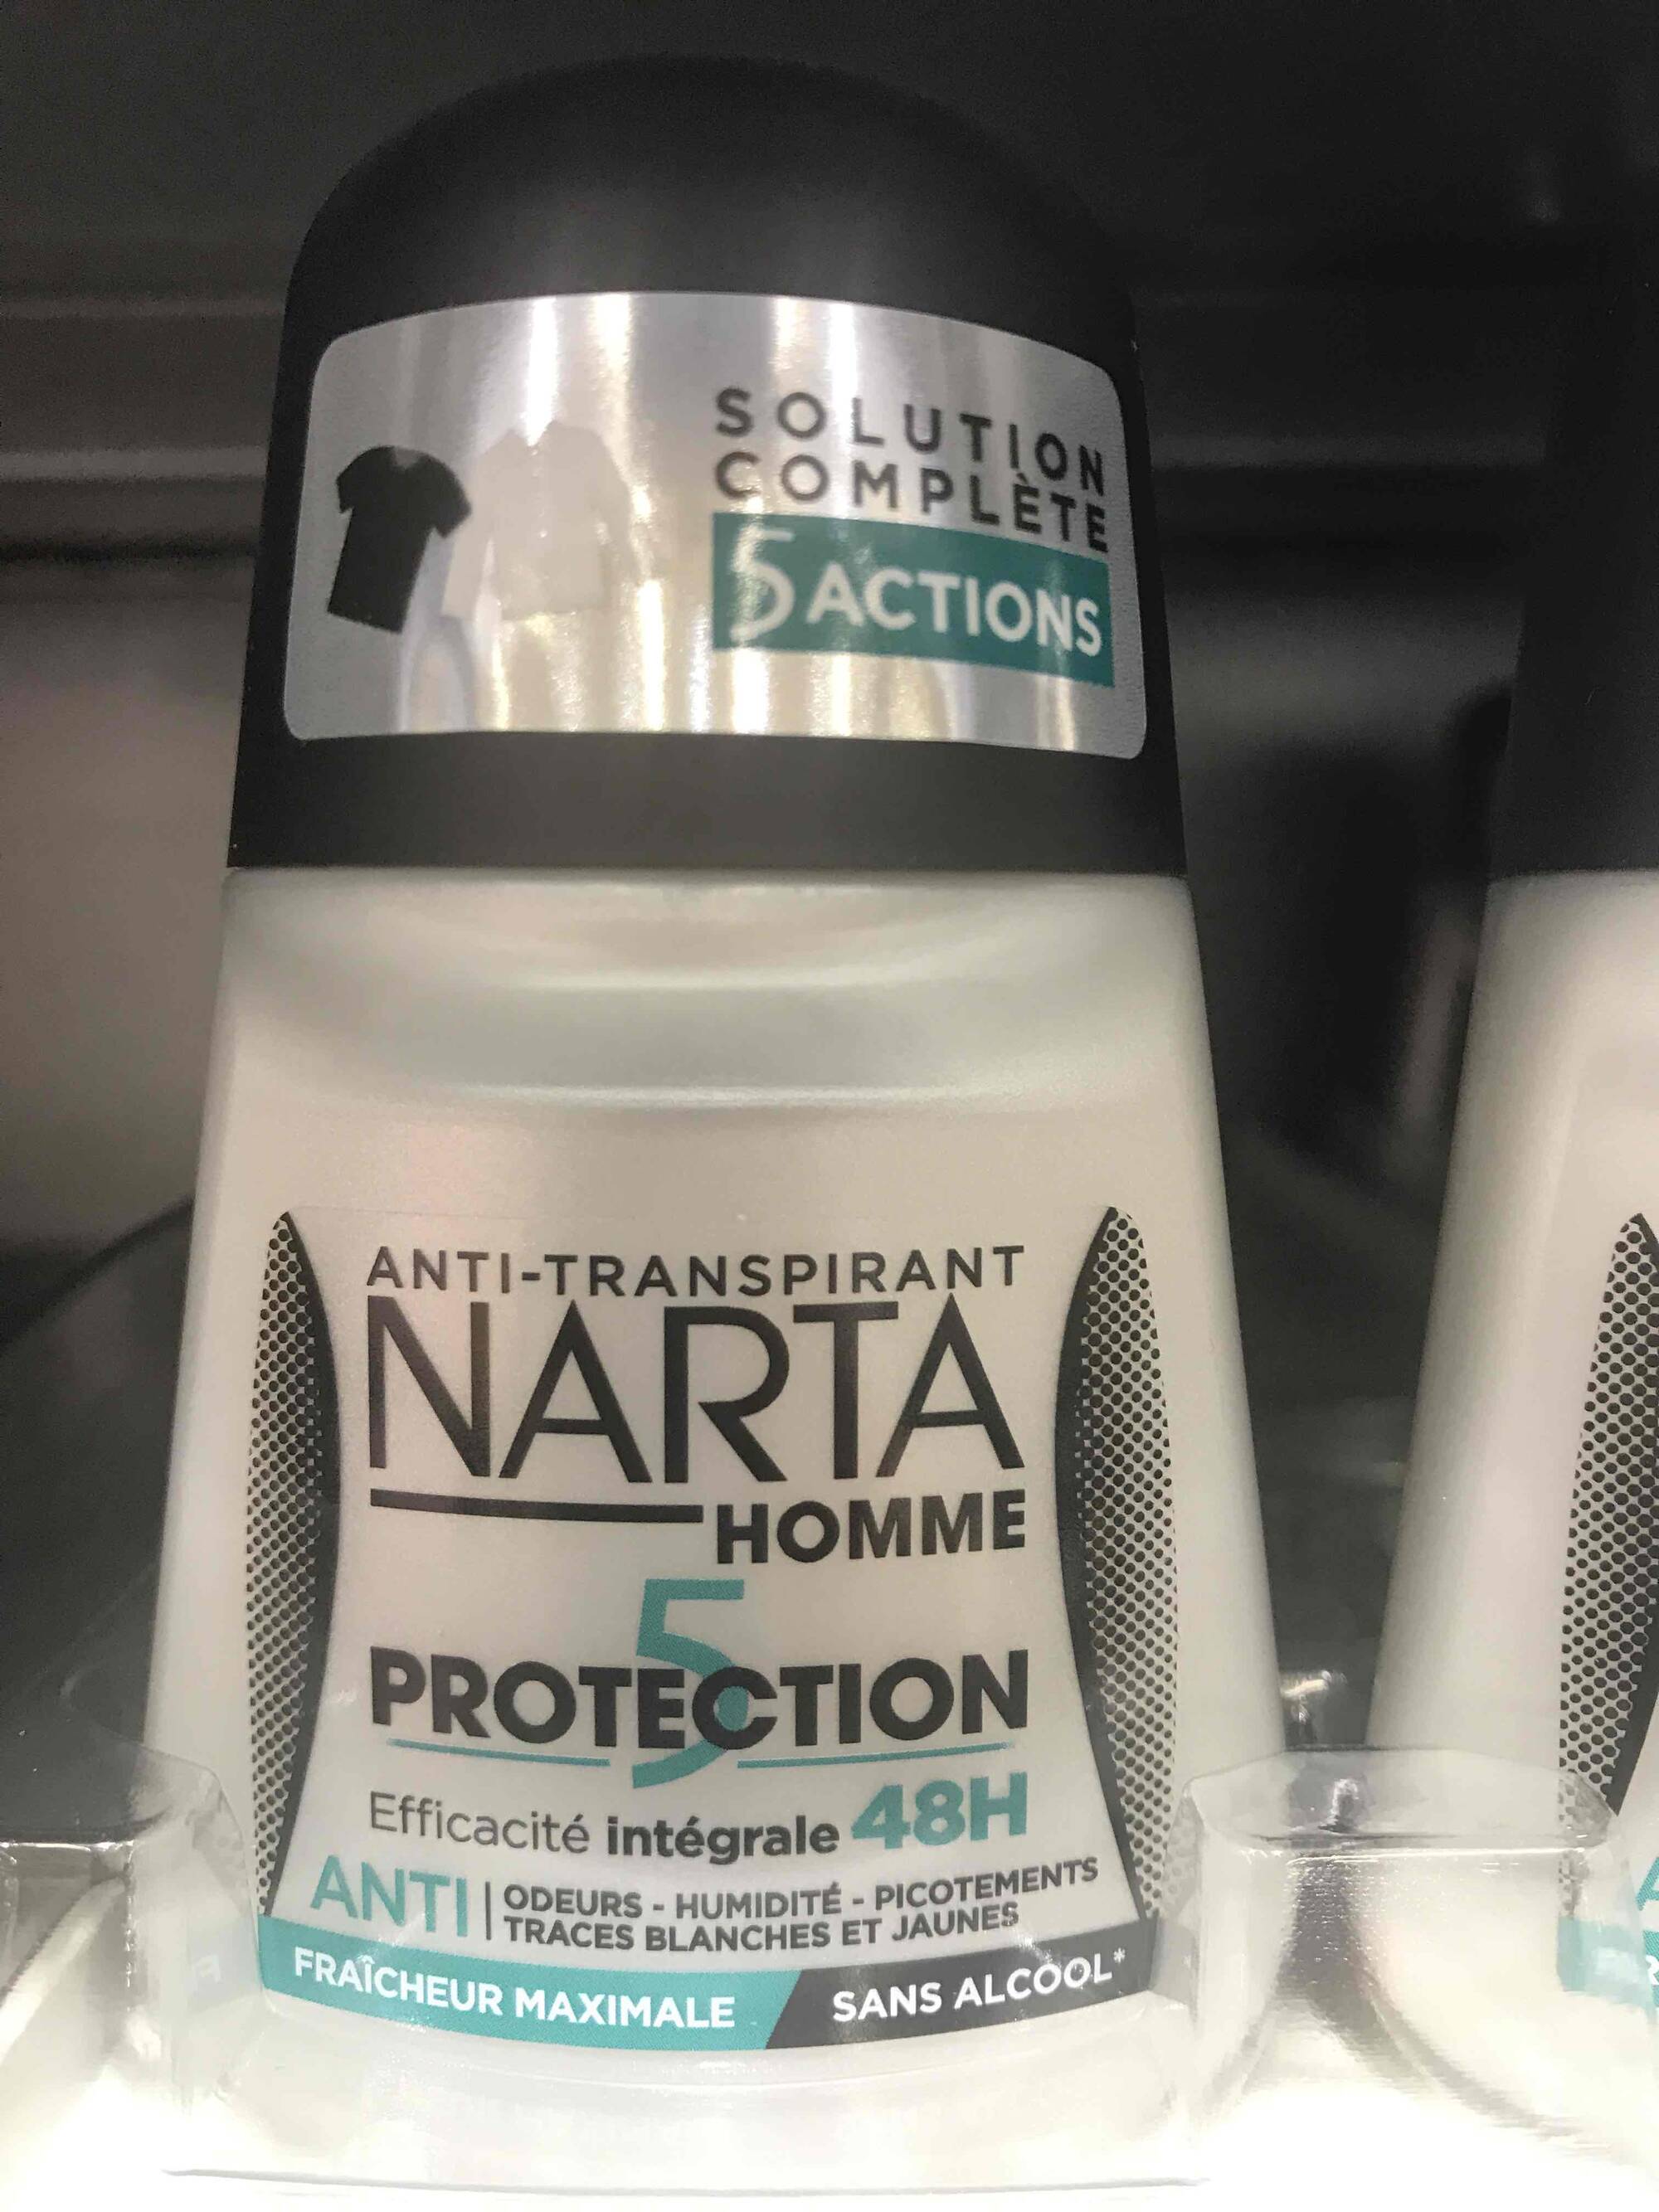 NARTA - Anti-transpirant protection 48h homme 